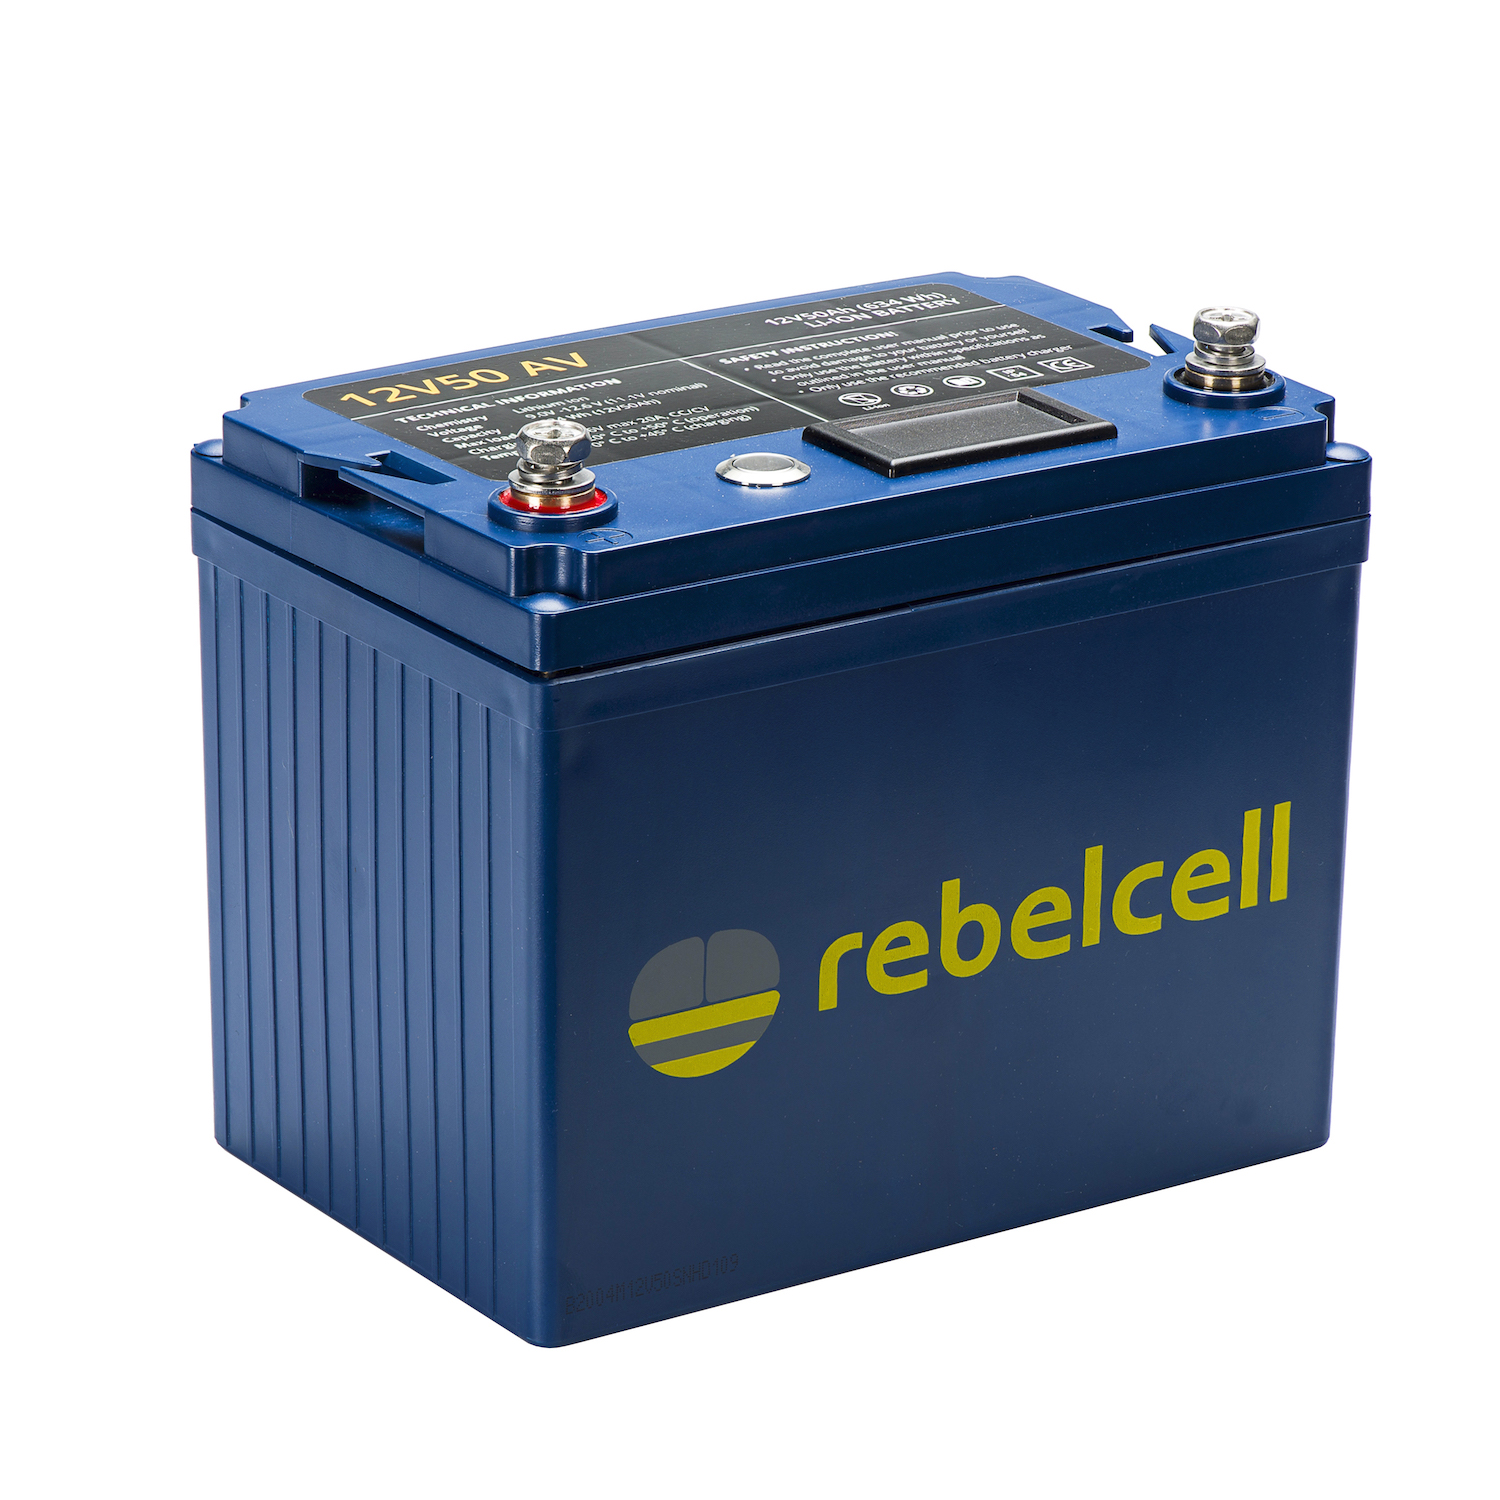 Radioactief Hou op bolvormig 12 volt 50Ah Lithium accu | Rebelcell | Portable energie voor buiten